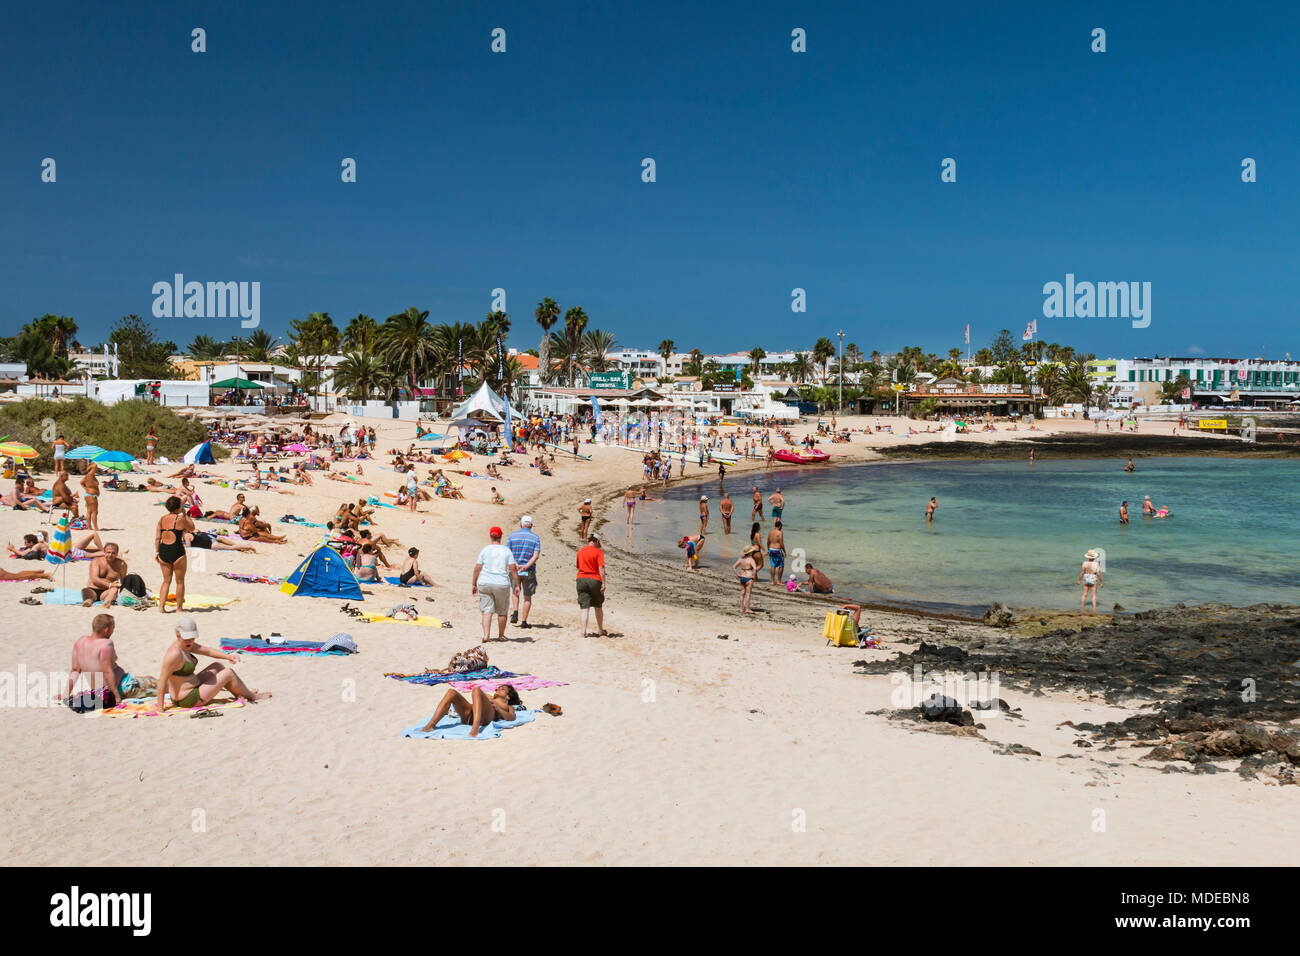 FUERTEVENTURA - SEPTEMBER 20: Tourists enjoying the day at a Corralejo City beach in Fuerteventura, Spain on September 20, 2015 Stock Photo